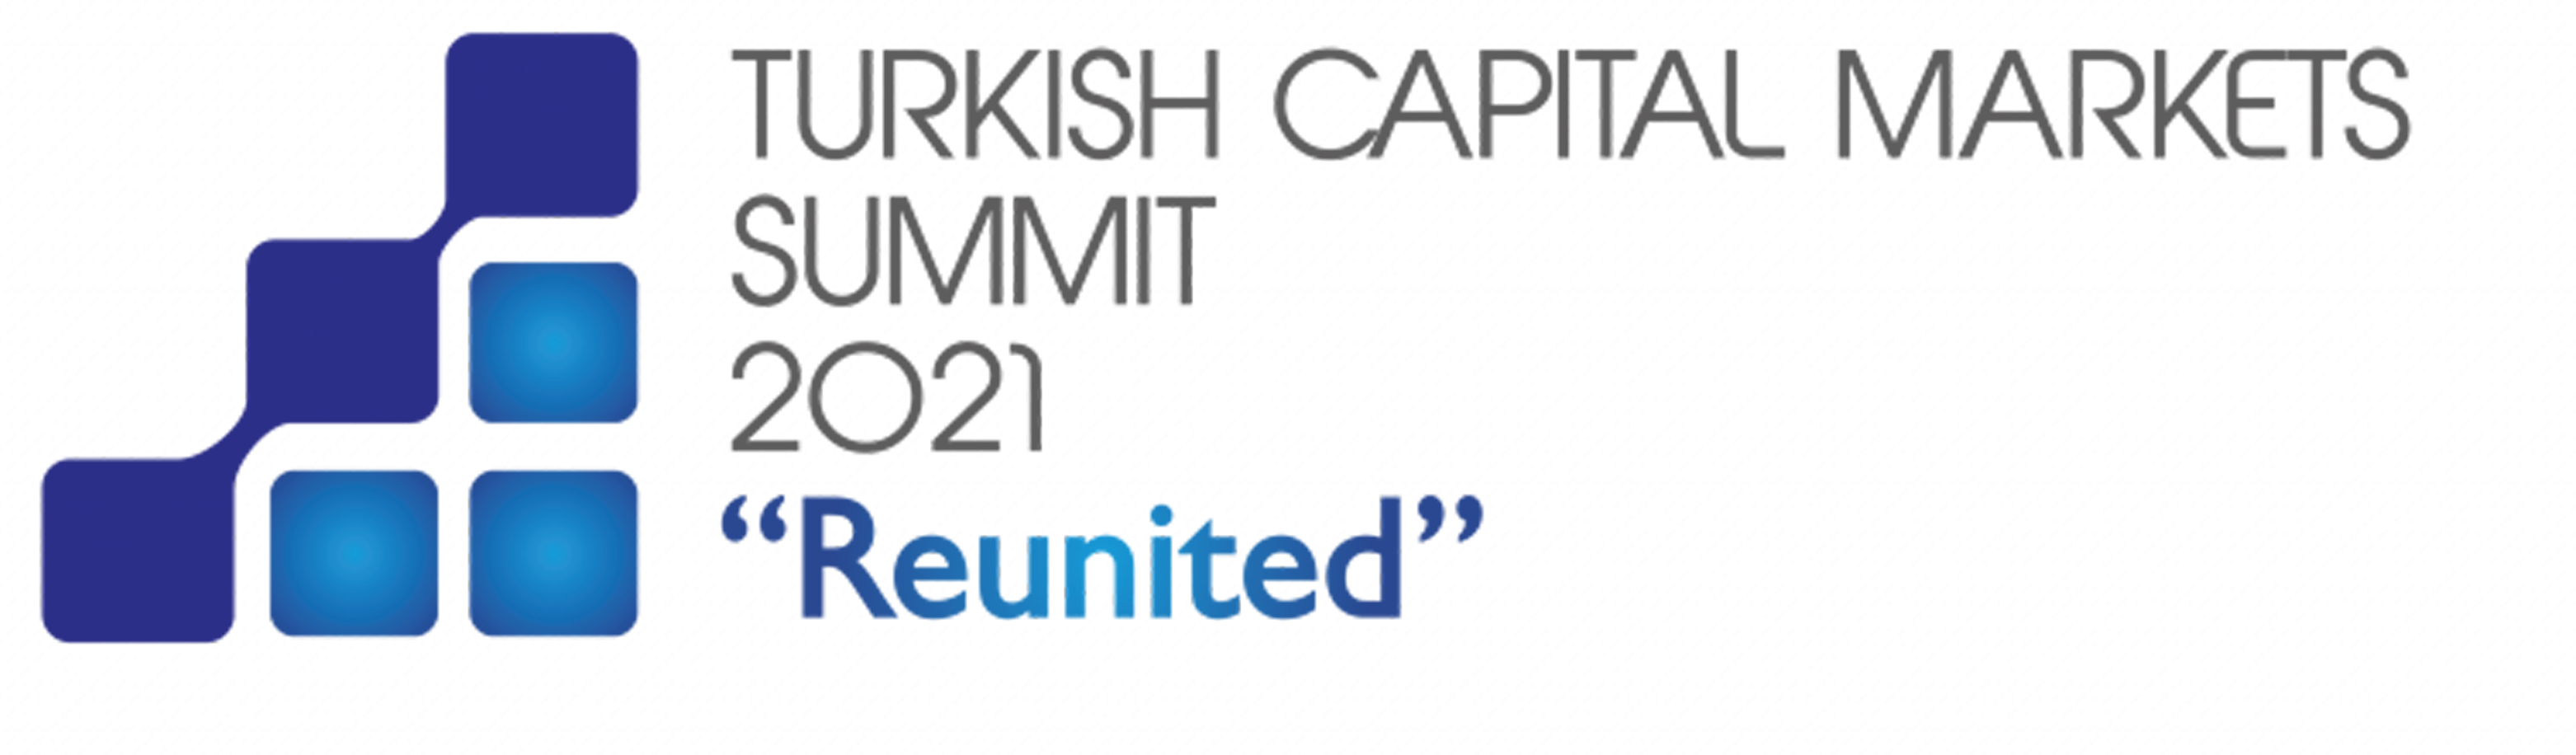 Turkish Capital Markets SummitTurkish Capital Markets Summit